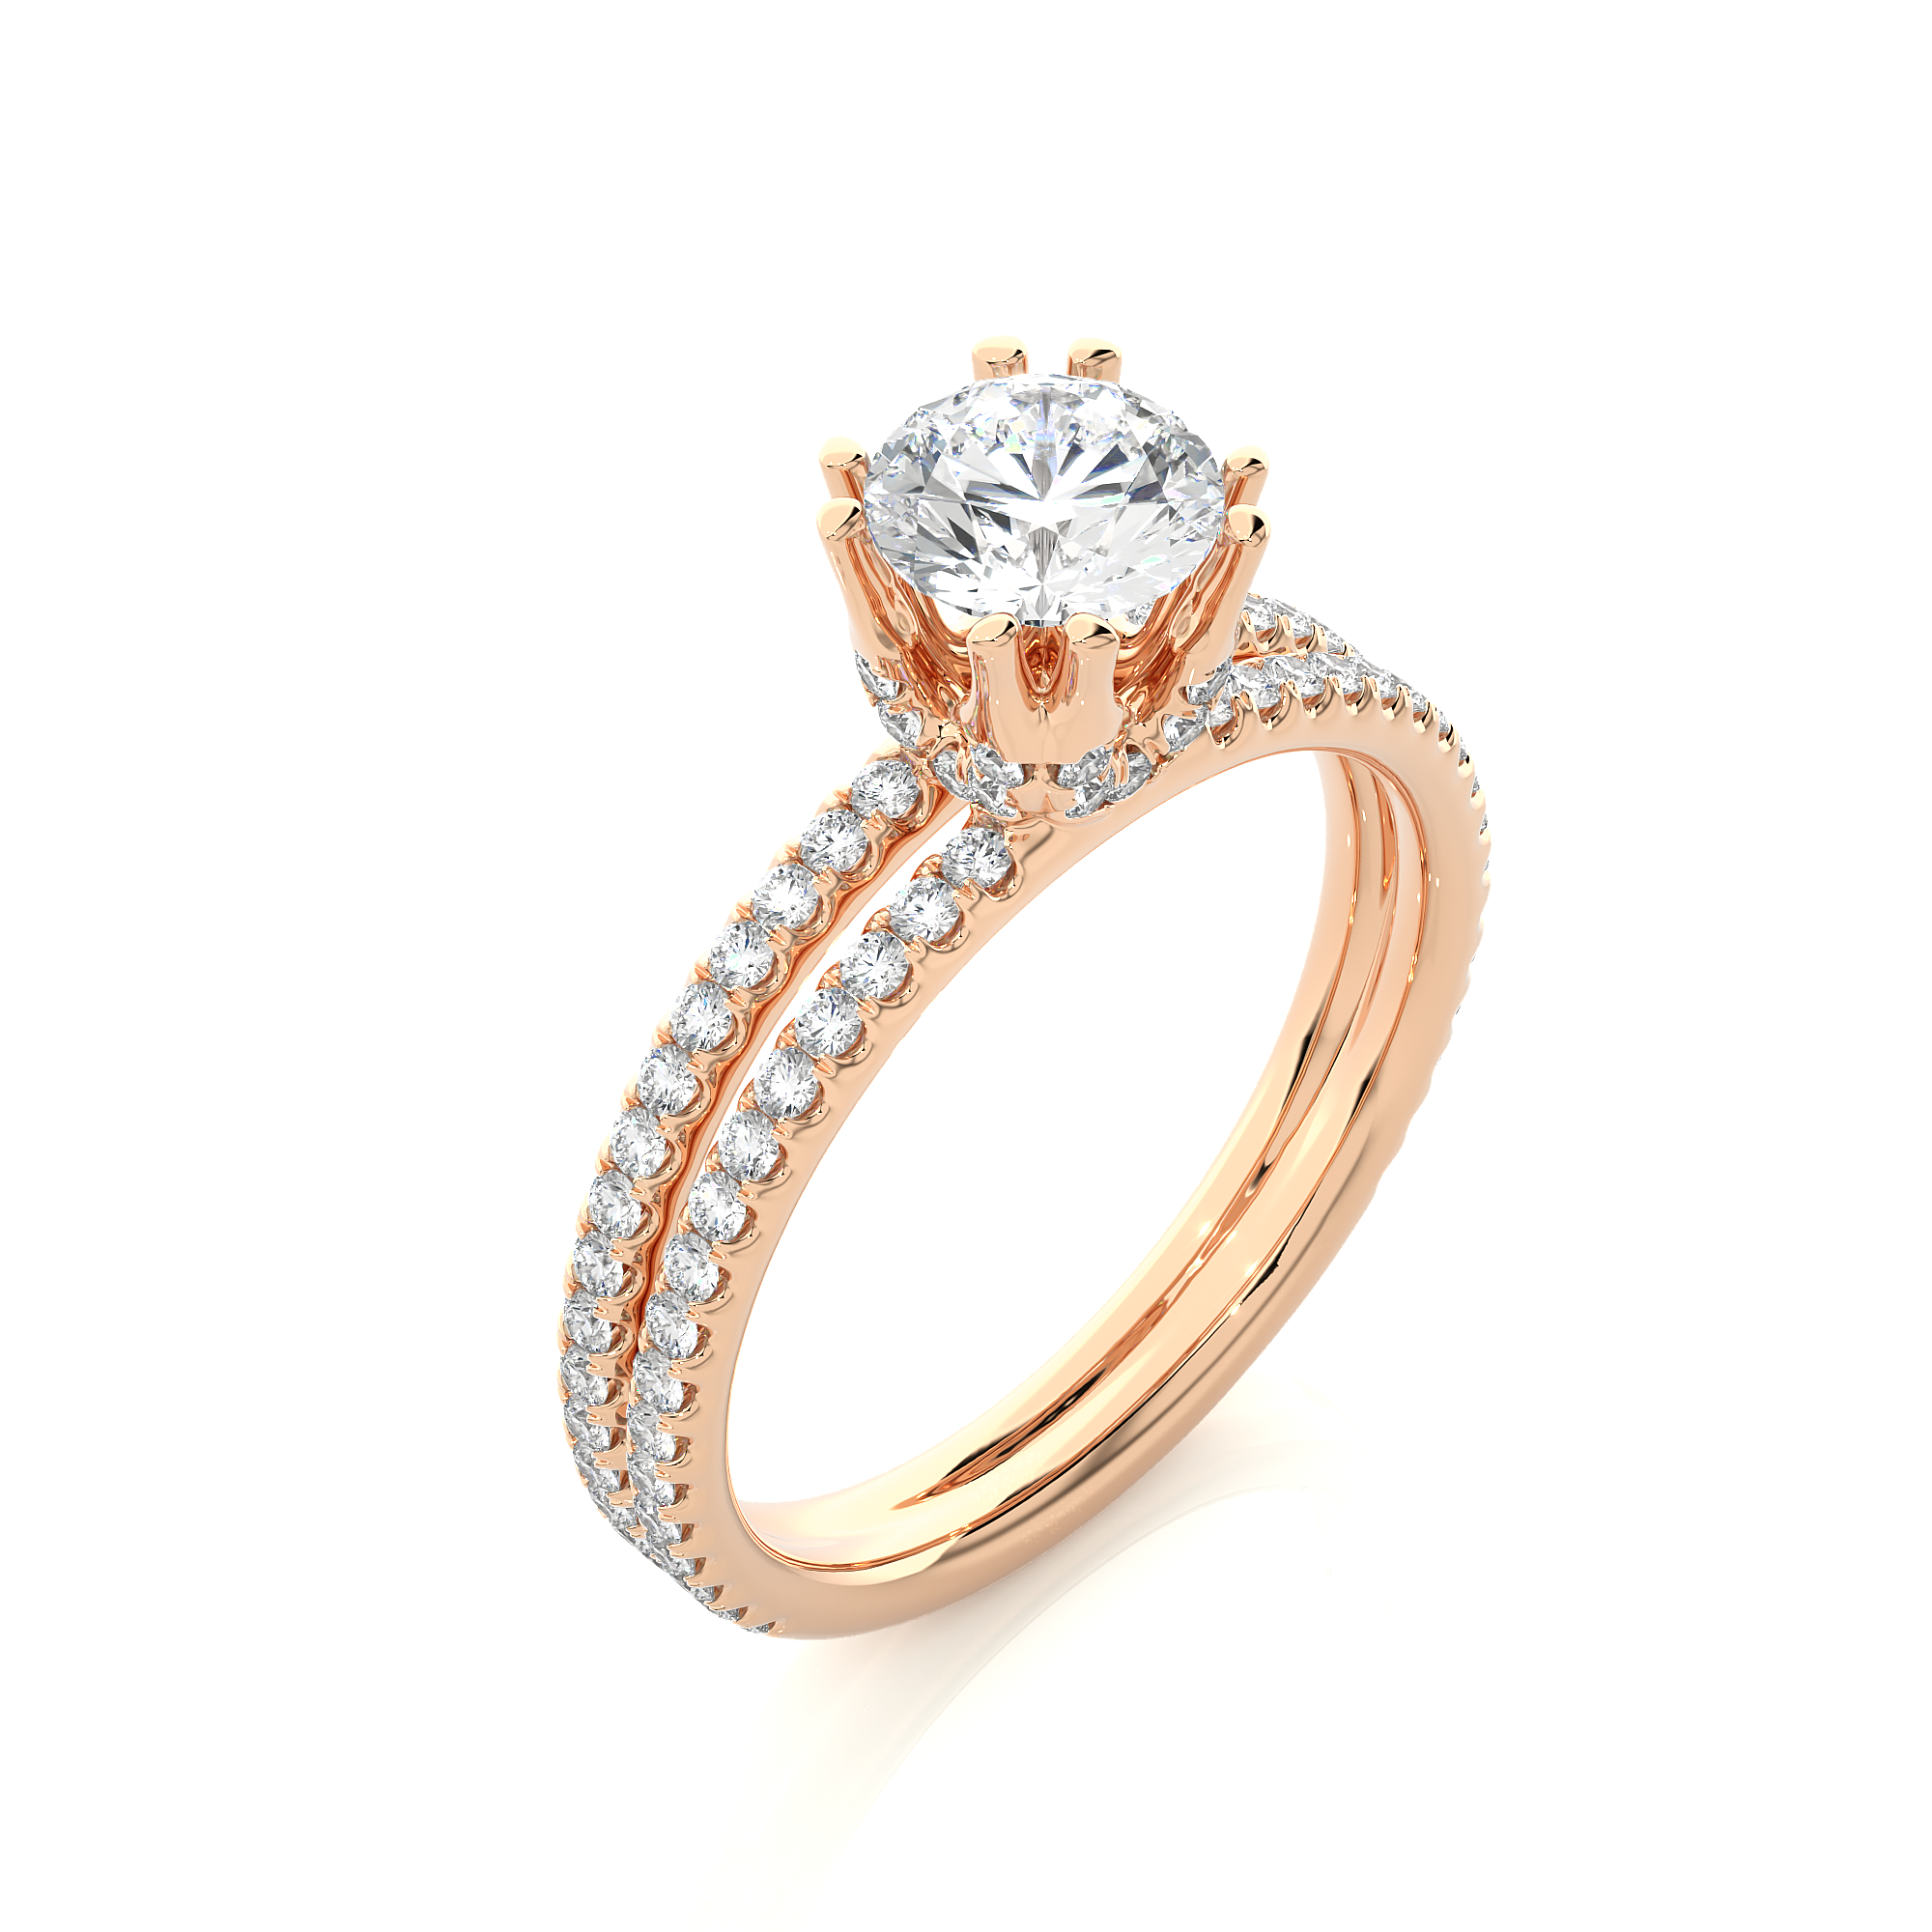 Victoria Ring - Solitaire Diamond Ring